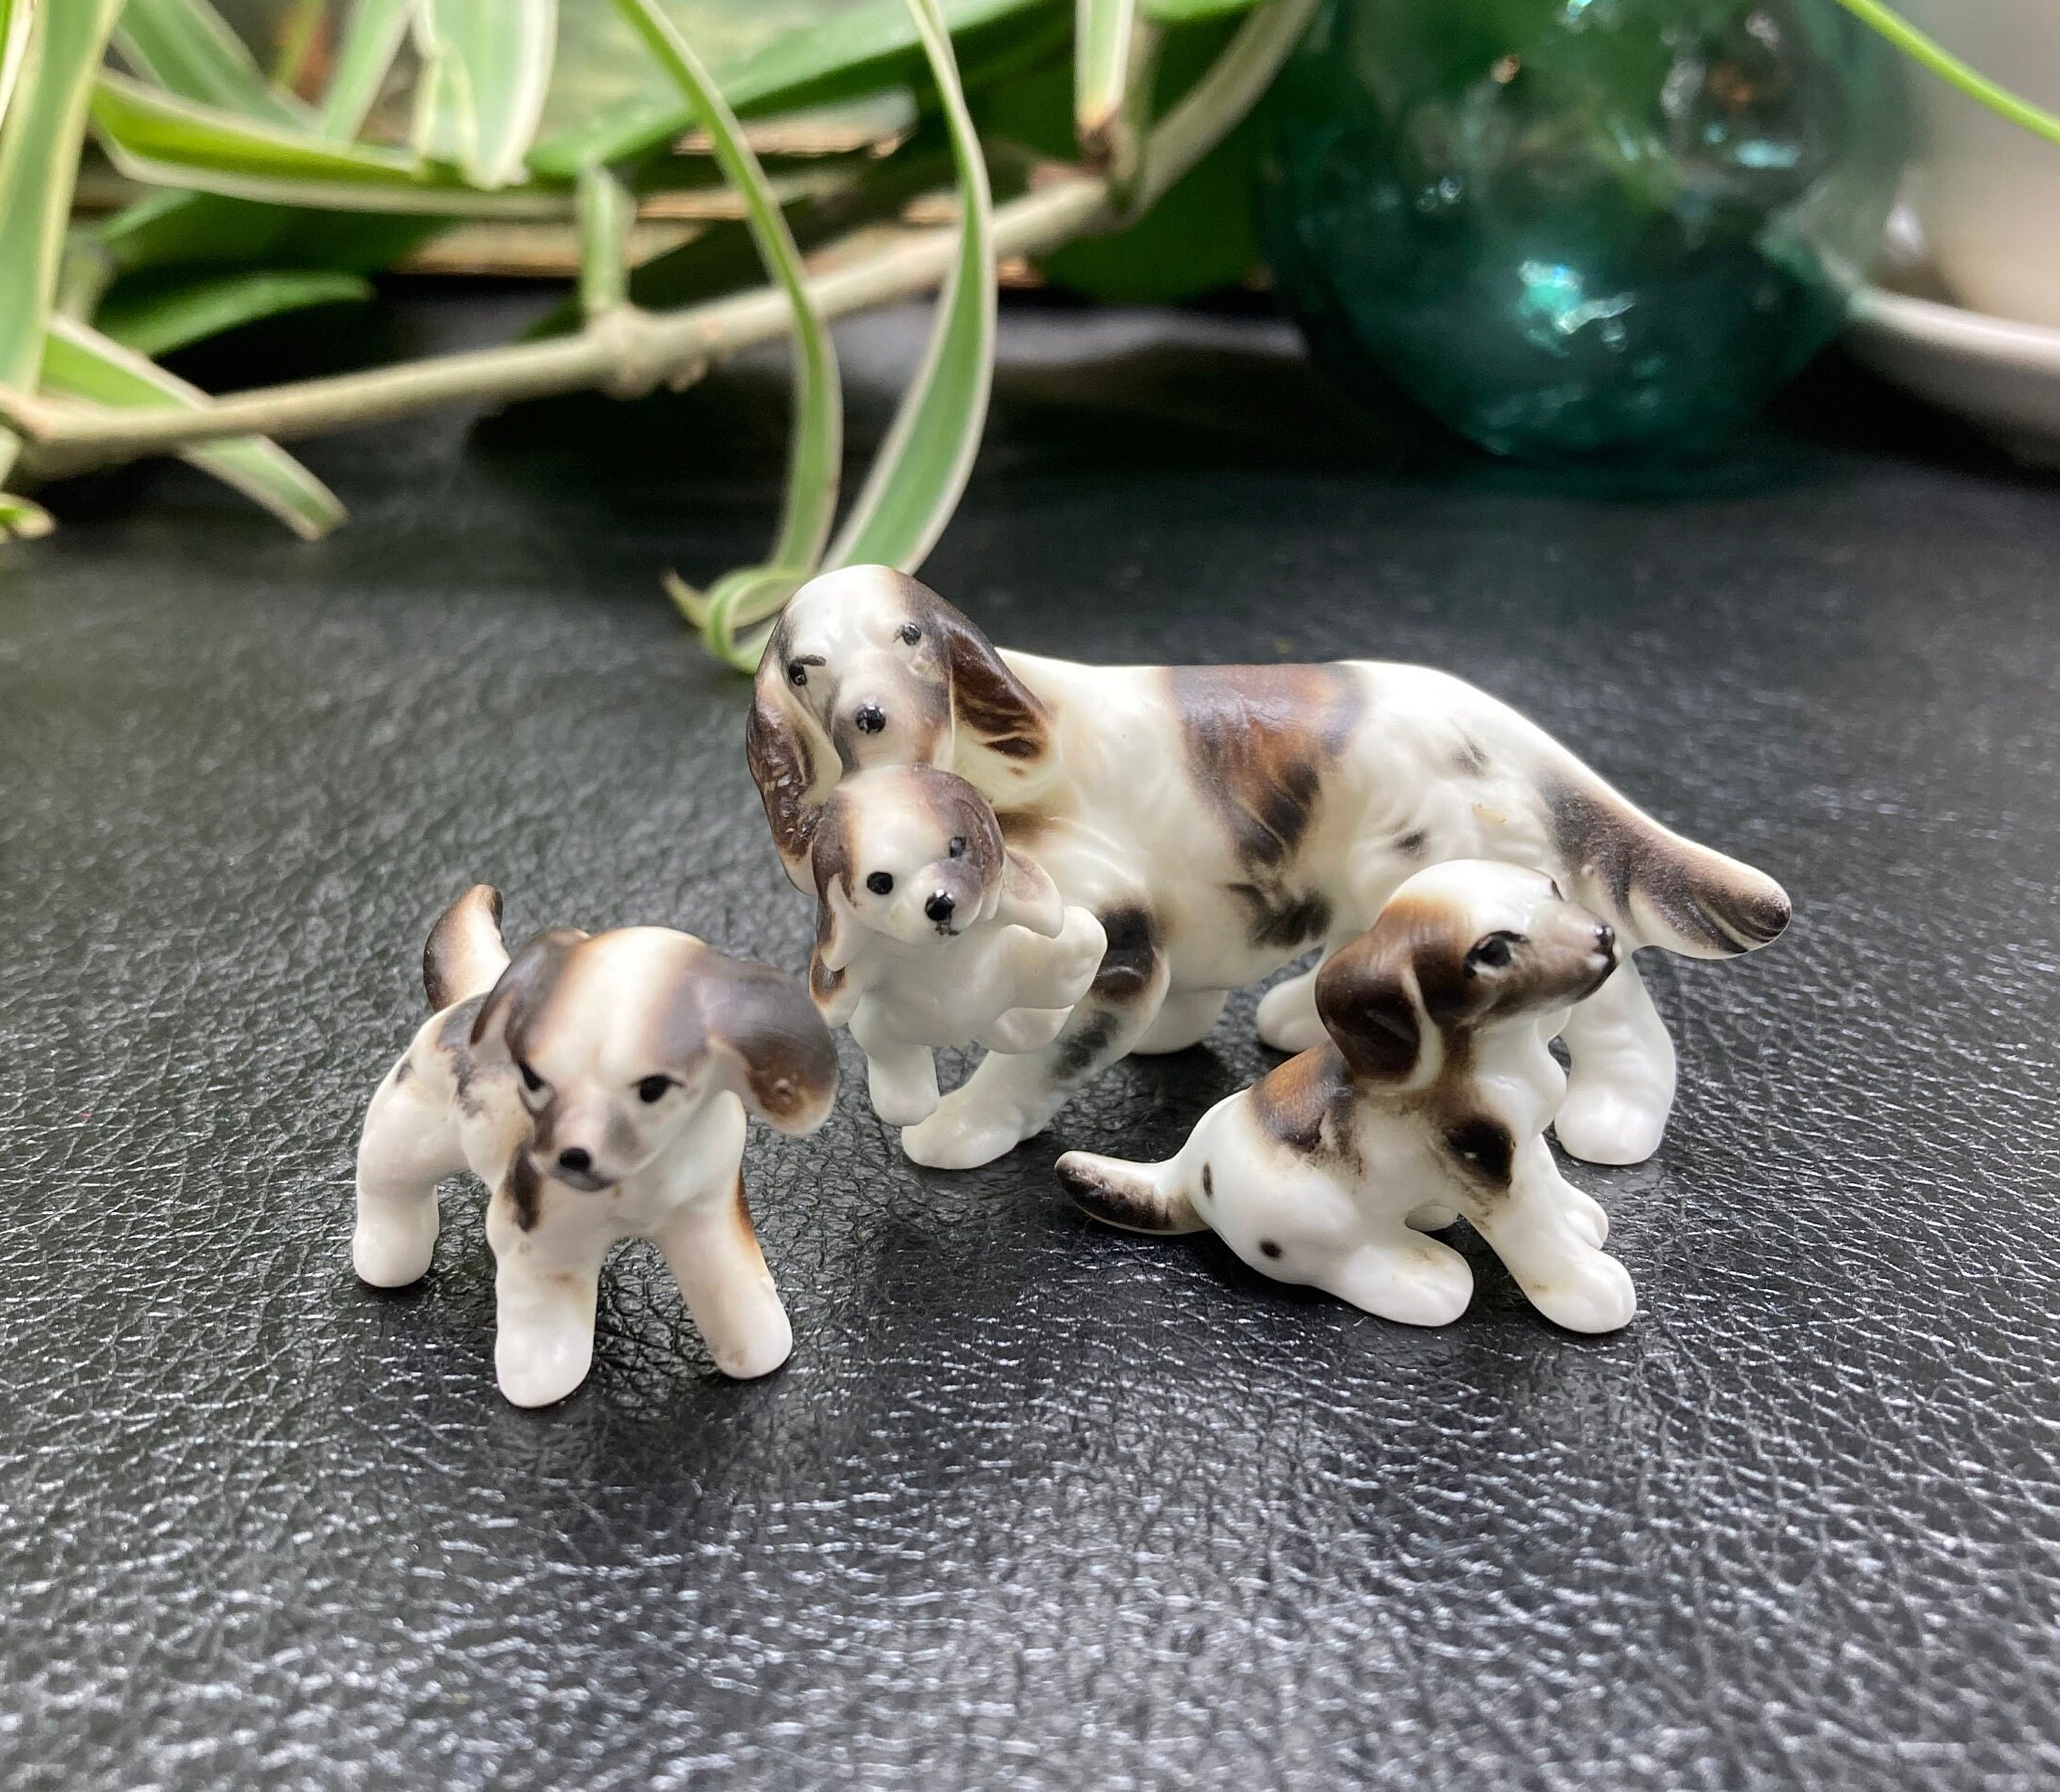 (3) Miniature Boxer Dog/Puppy Figures Bone China Porcelain White & Brown  Japan